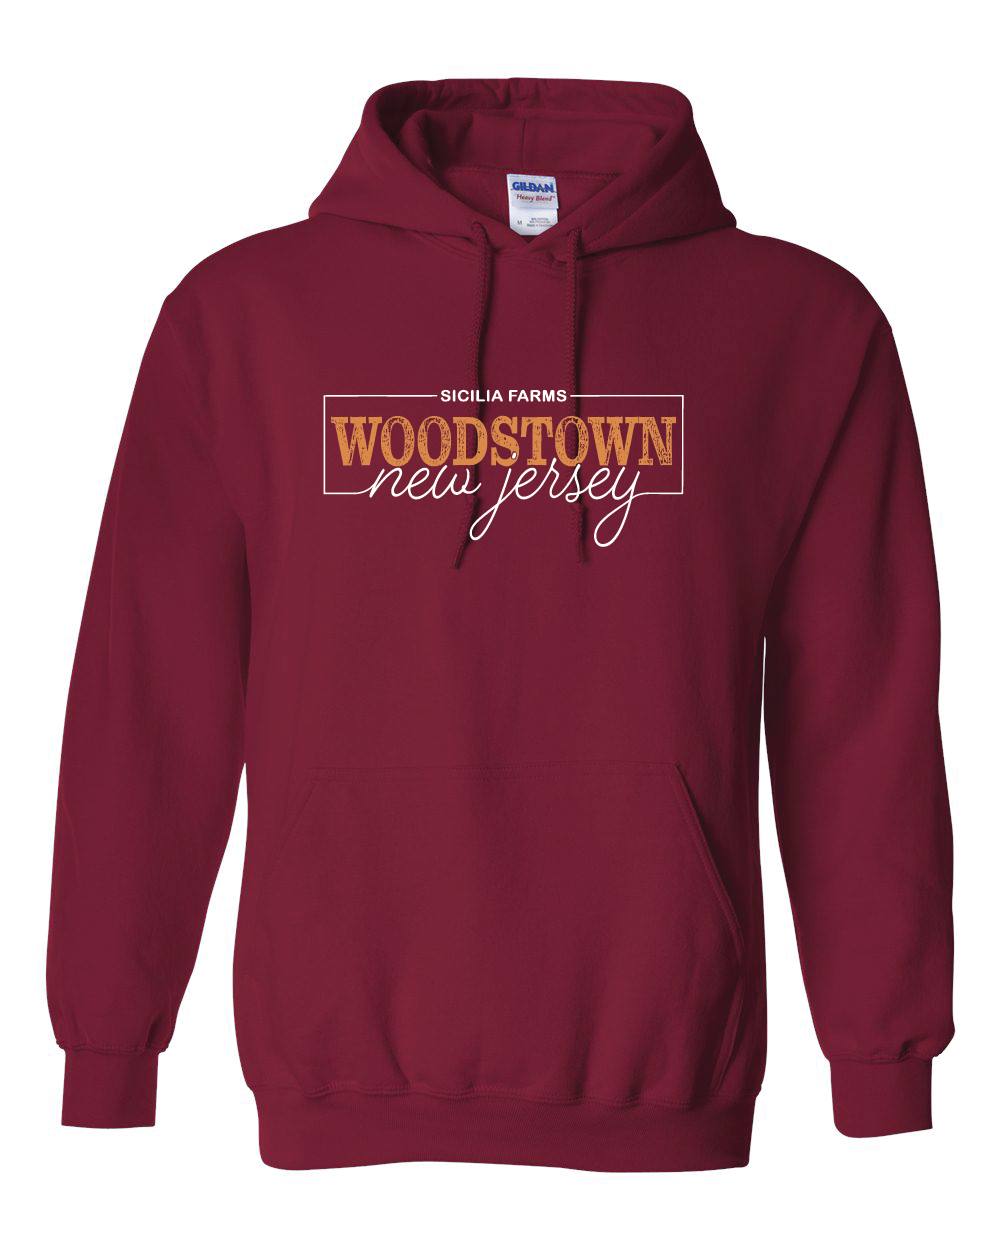 Woodstown - Heavy Blend Hooded Sweatshirt